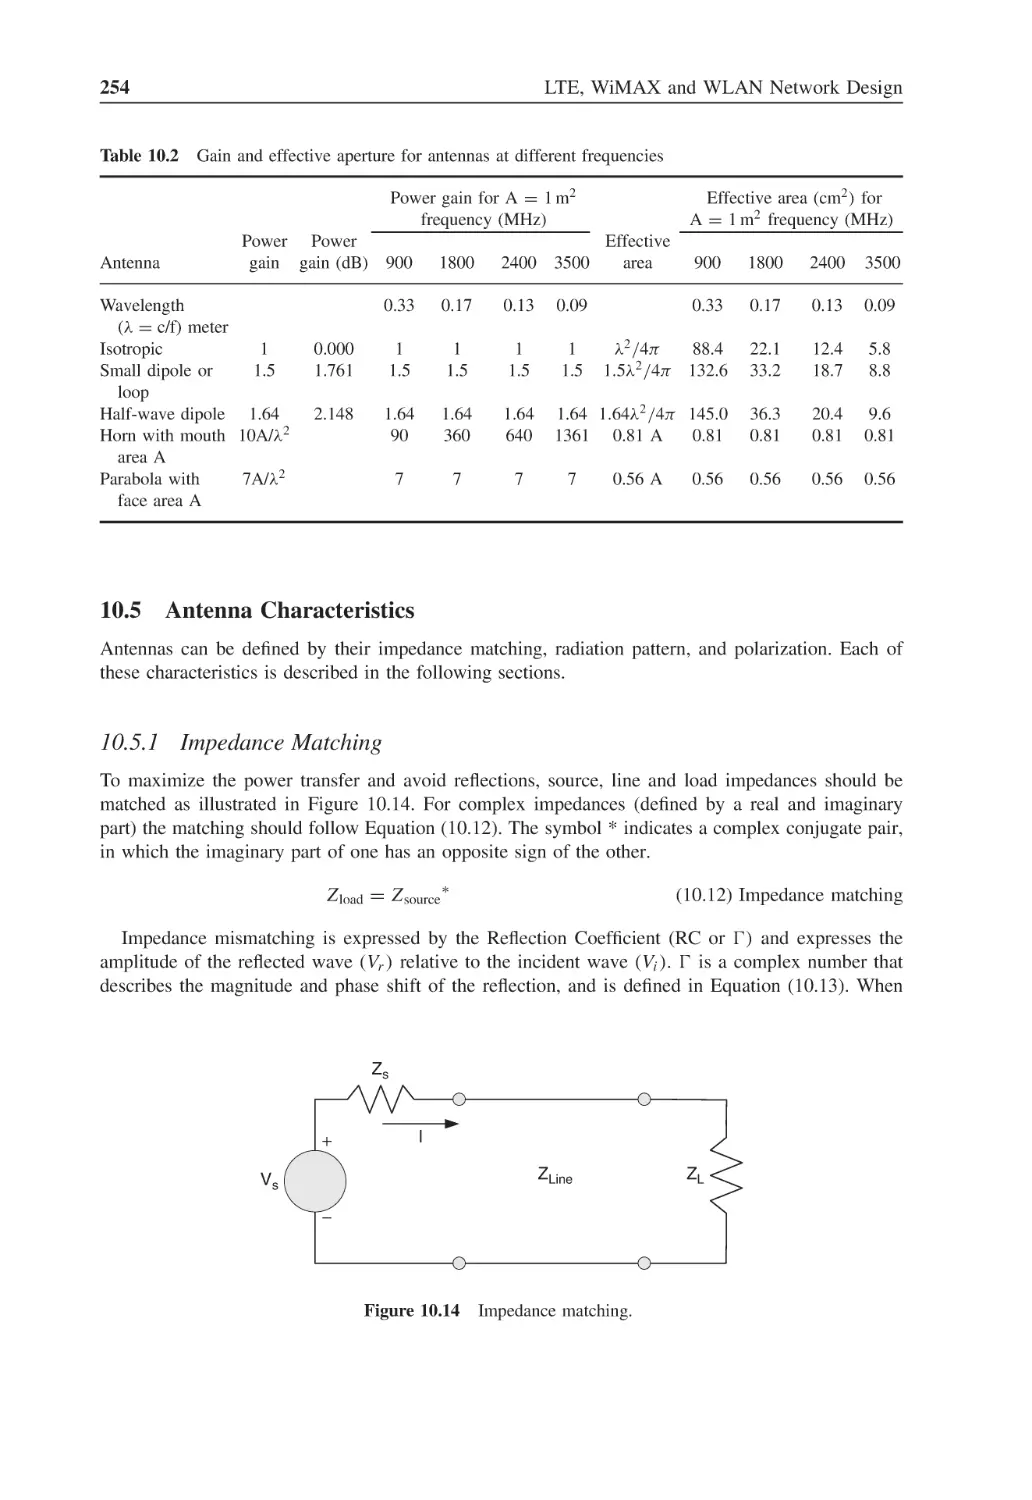 10.5 Antenna Characteristics
10.5.1 Impedance Matching